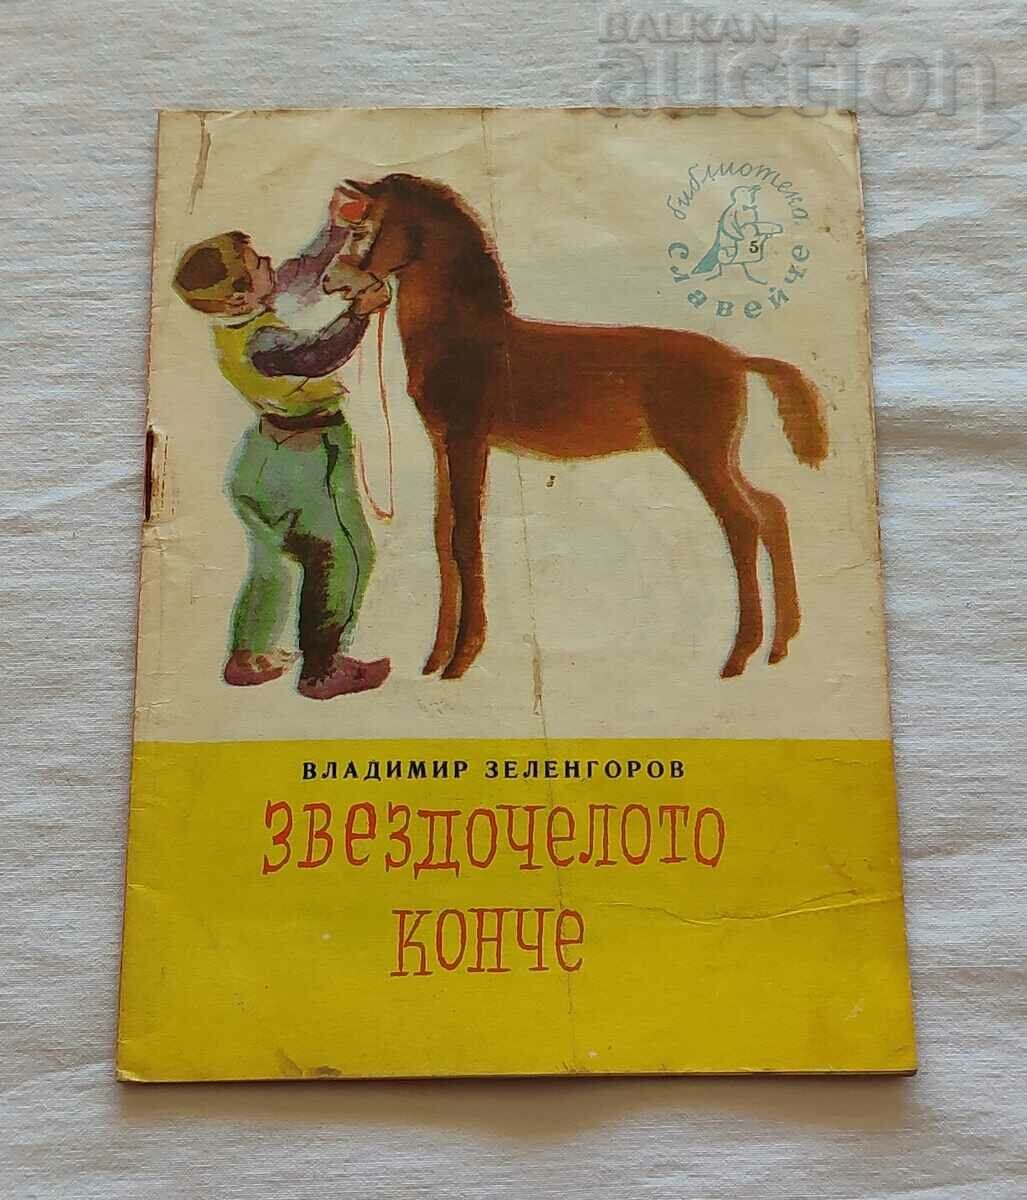 THE STAR-HEADED HORSE VL.ZELENGOROV/IL.PETROV 1959 "NIGHTINGALE"